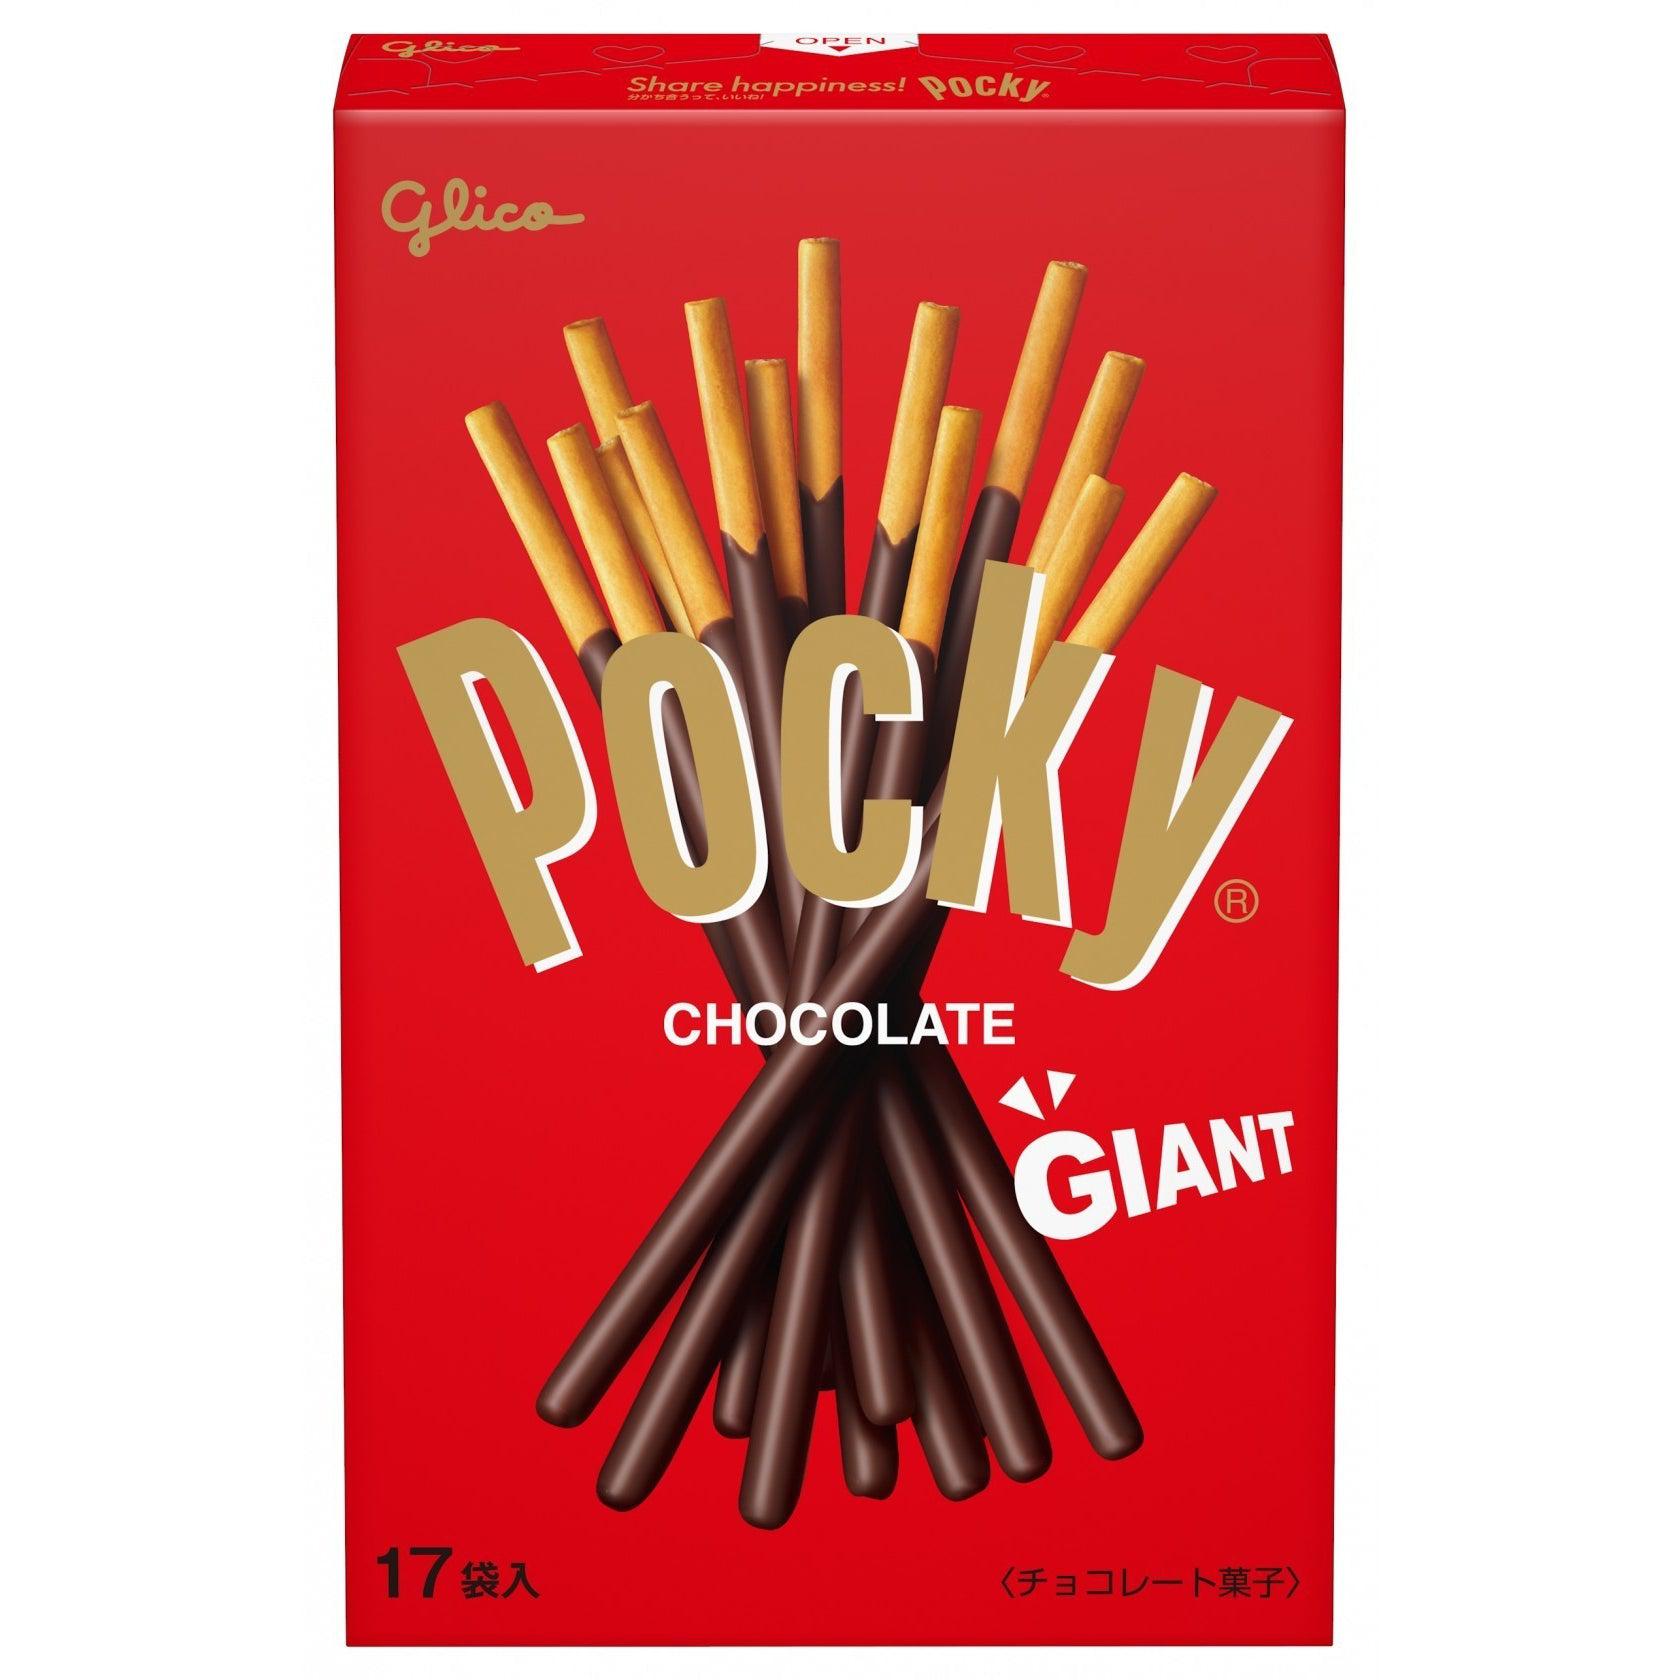 Glico Pocky Giant Chocolate Sticks Snack 17 Sticks